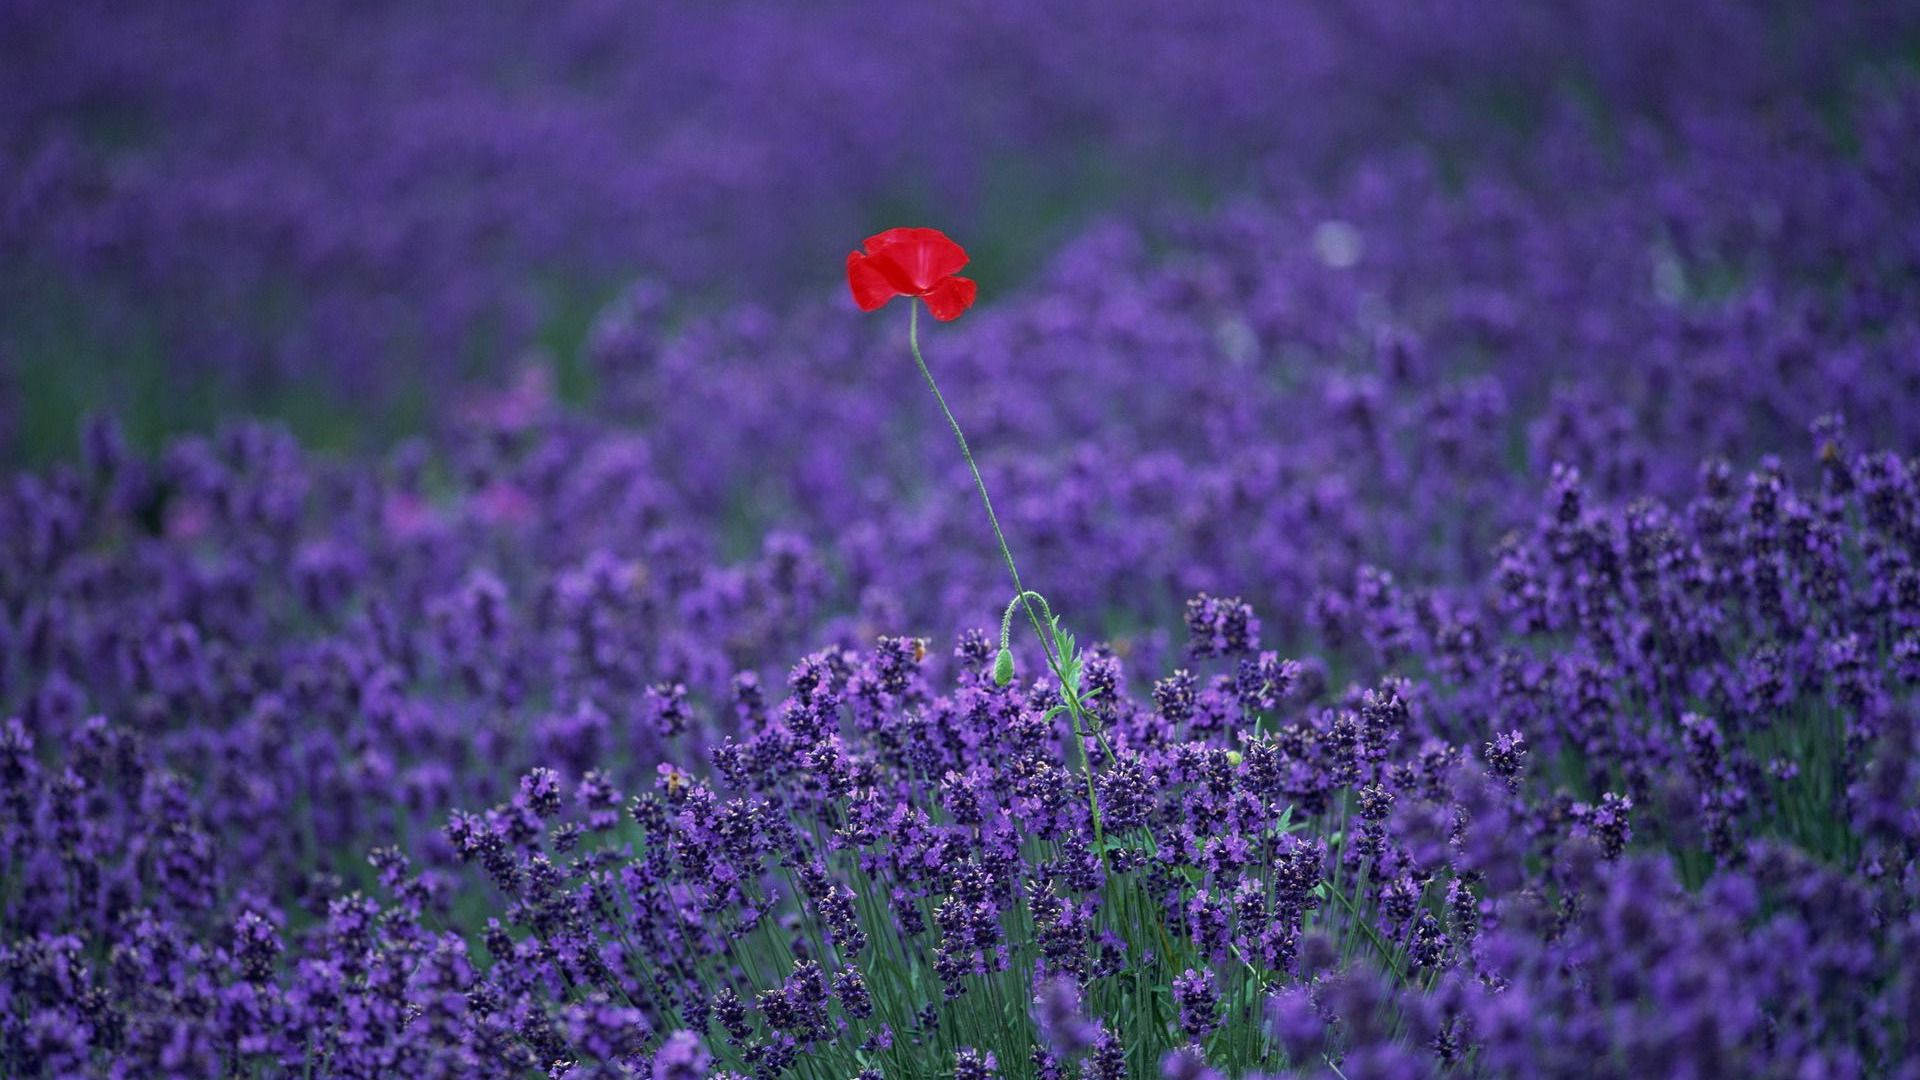 A Field of Red Flowers in a Lavender Field Wallpaper